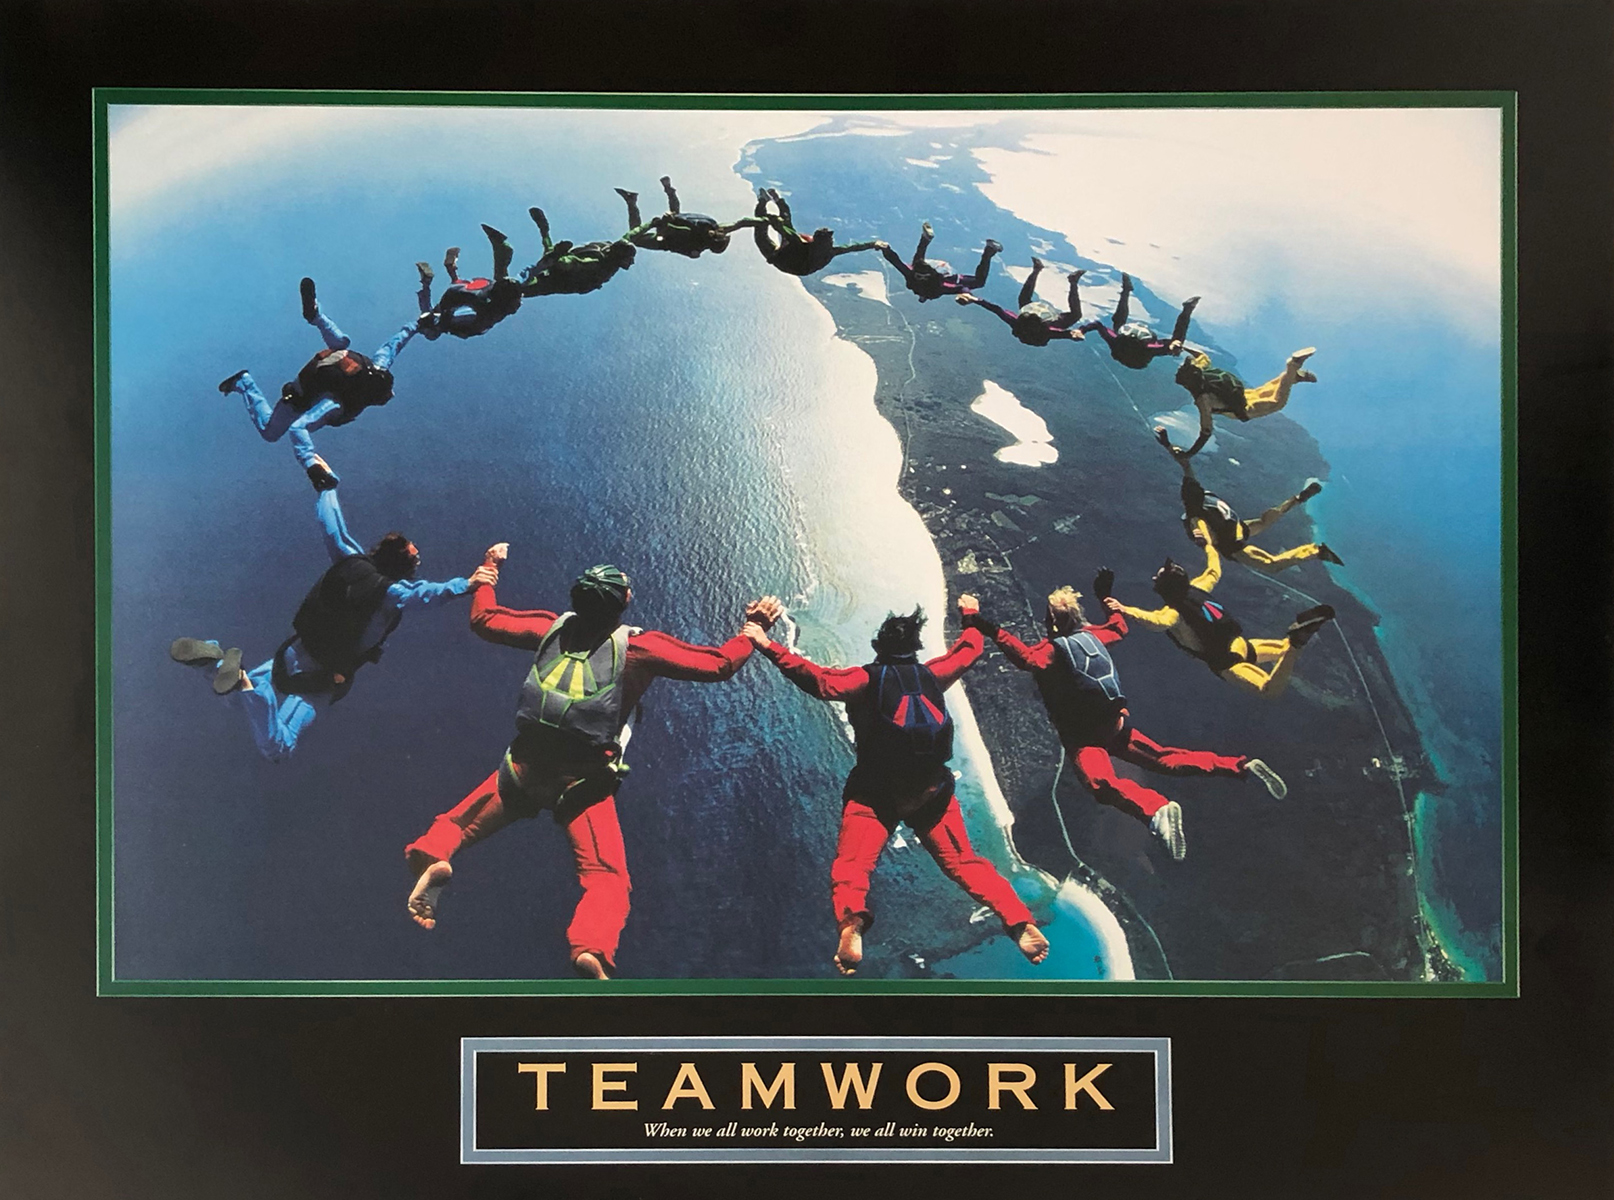 Teamwork - Sky Divers